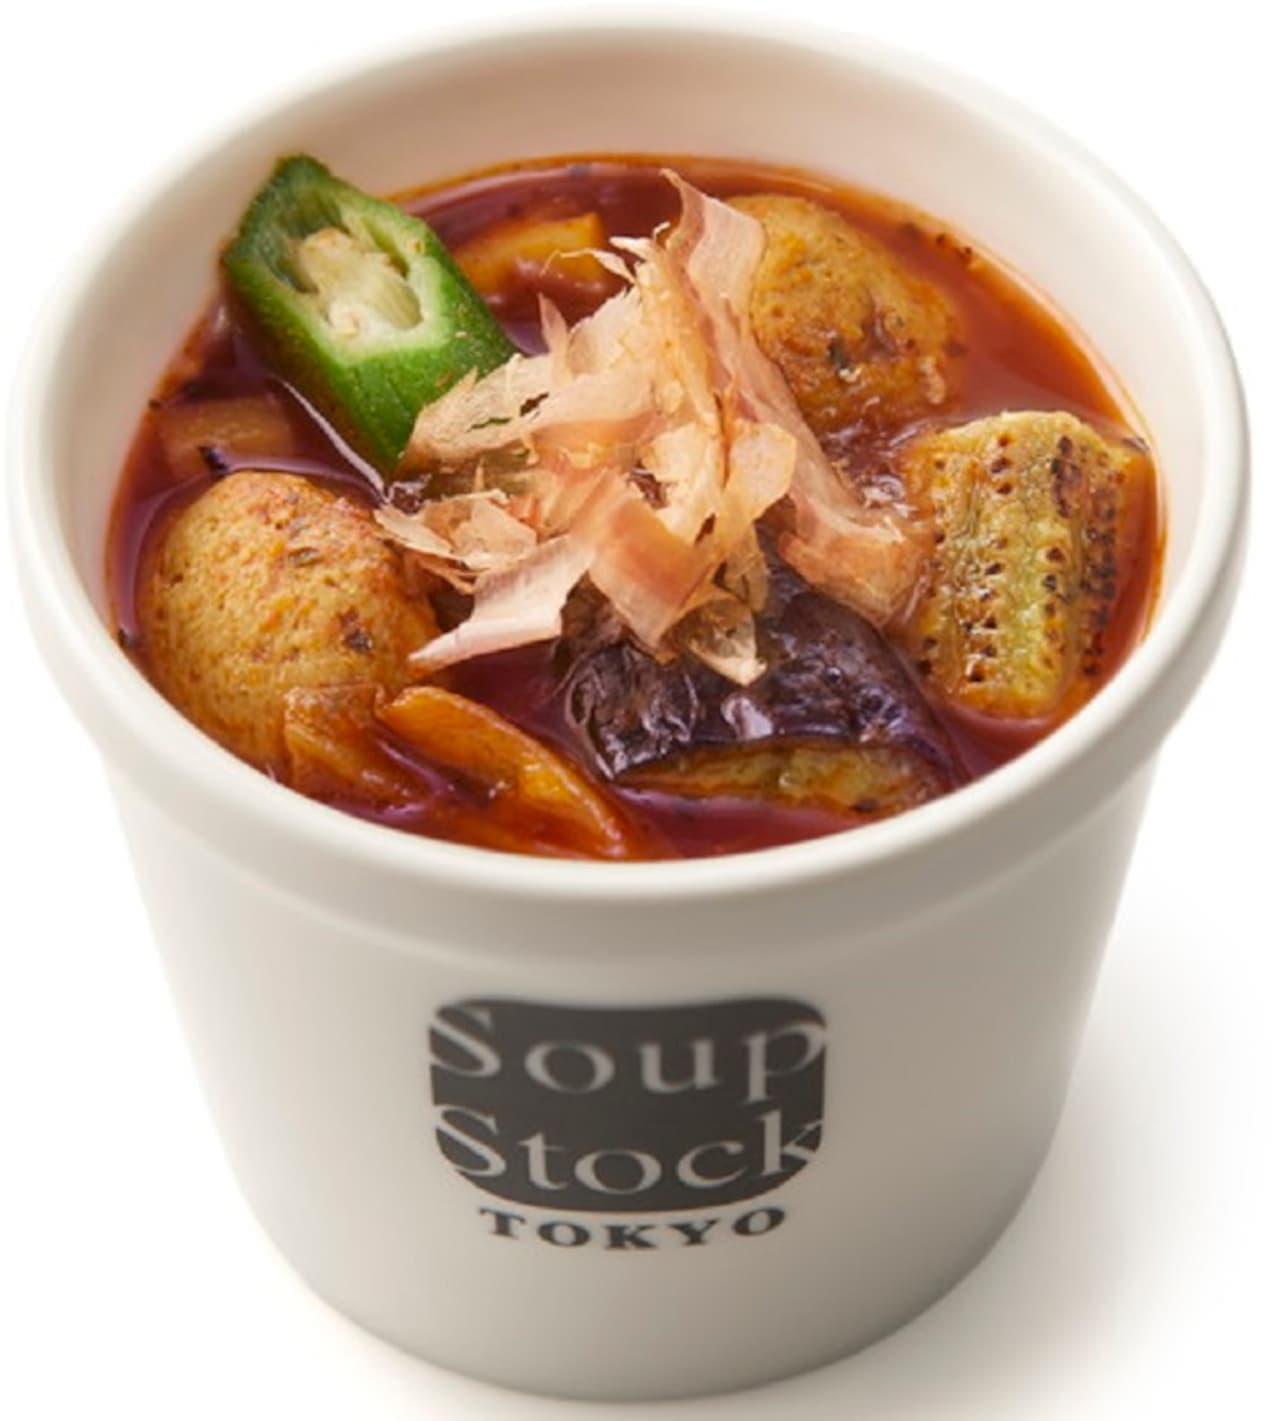 Soup Stock Tokyo "Surimi dumpling soup curry from Goto, Nagasaki Prefecture"